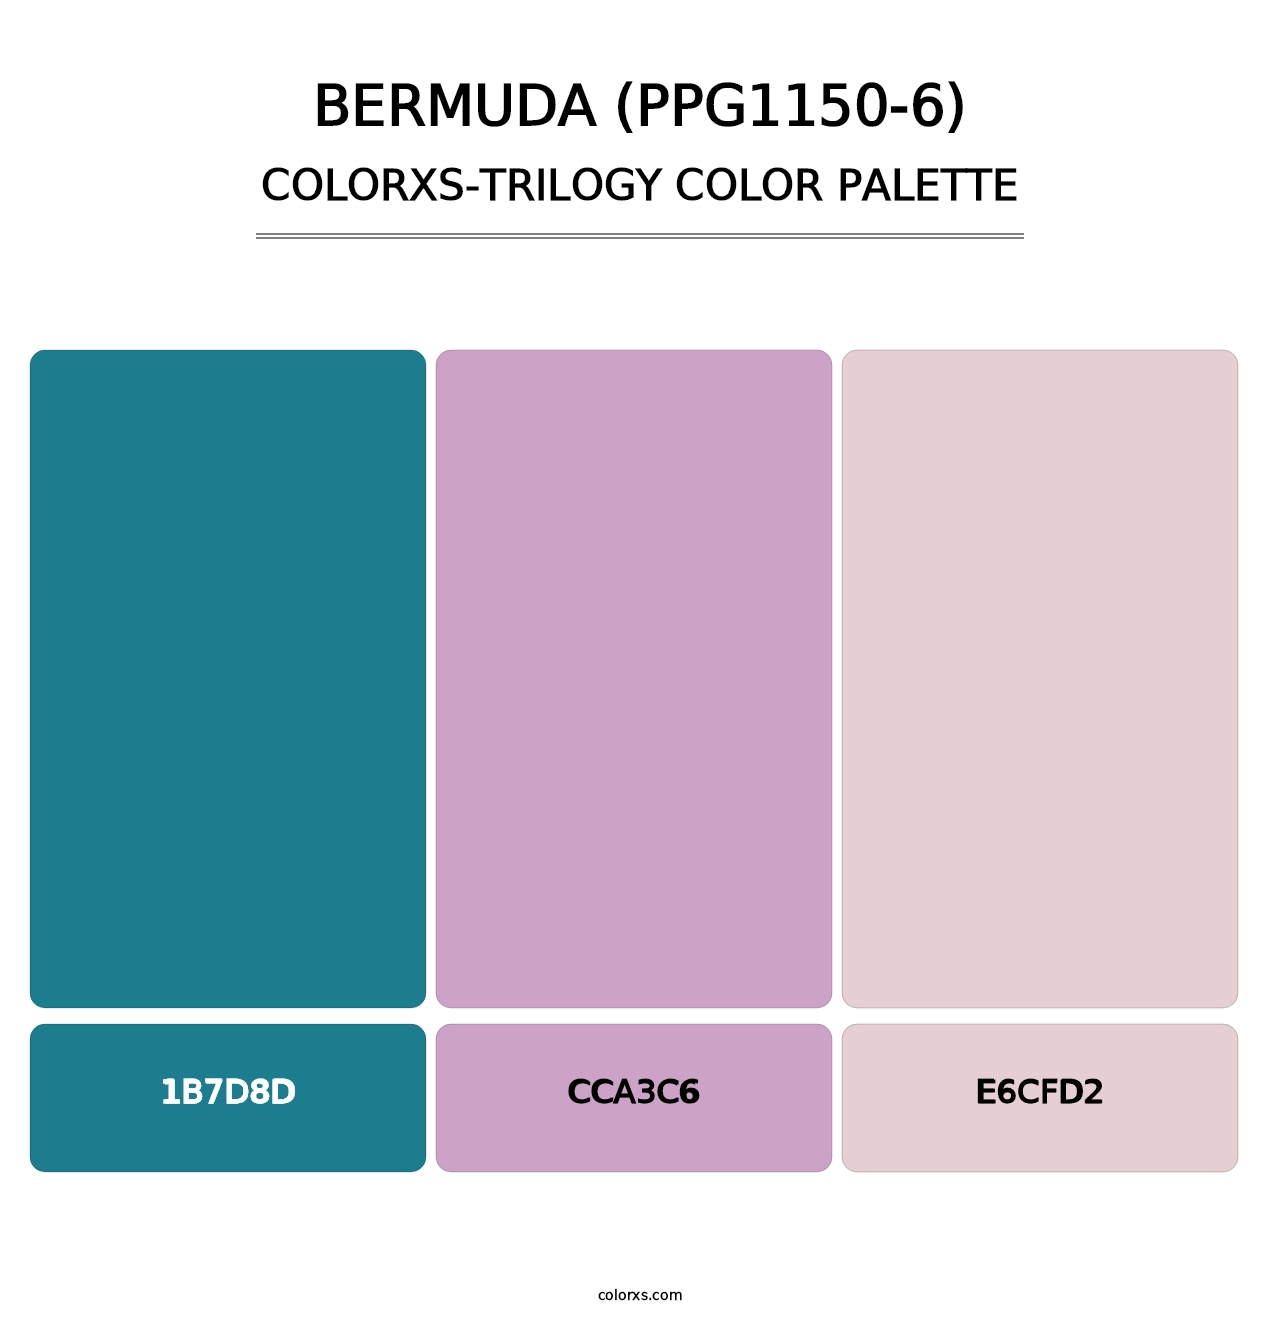 Bermuda (PPG1150-6) - Colorxs Trilogy Palette